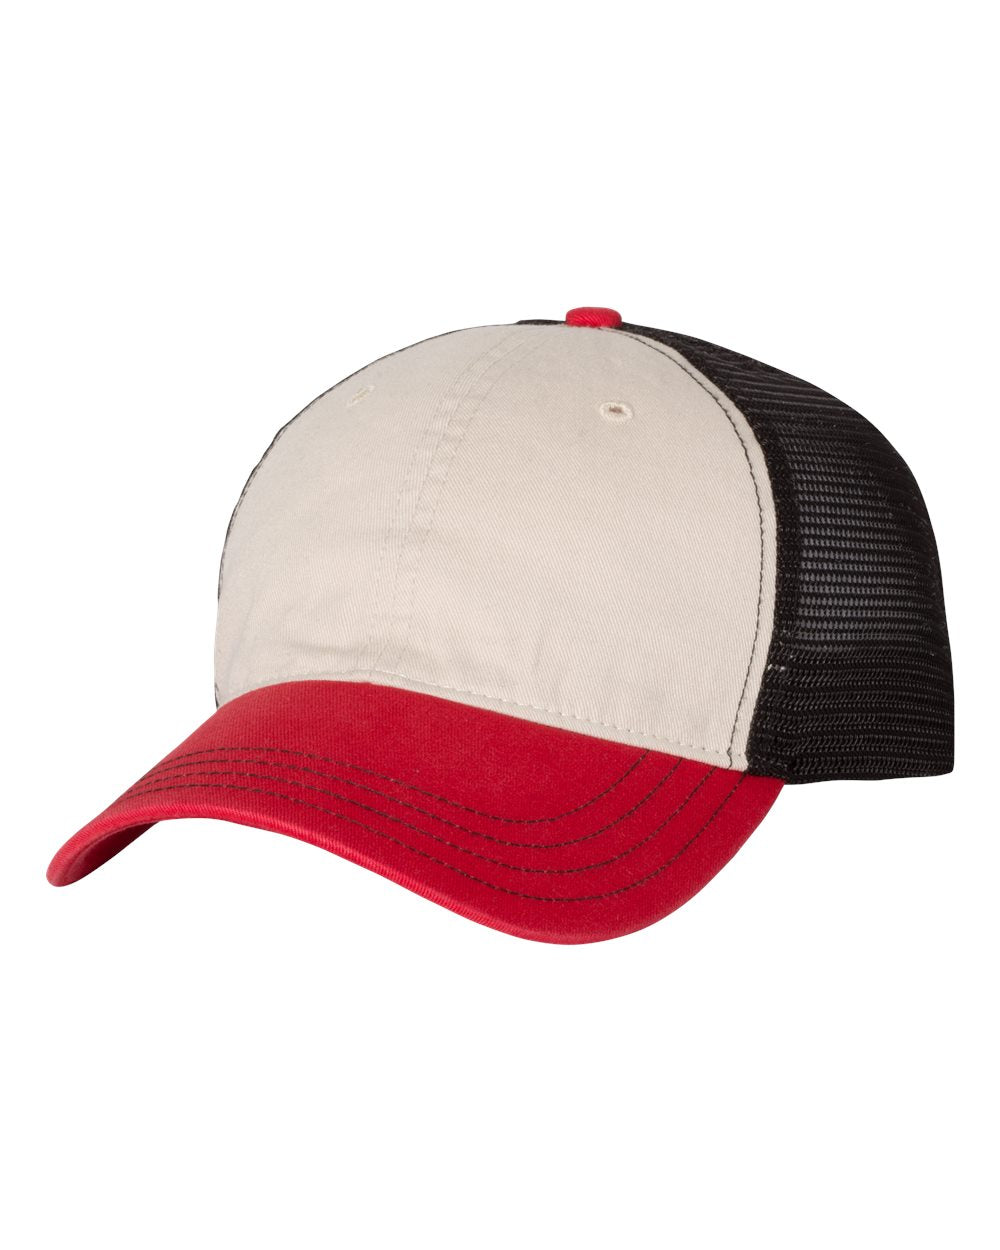 richardson cap black red white